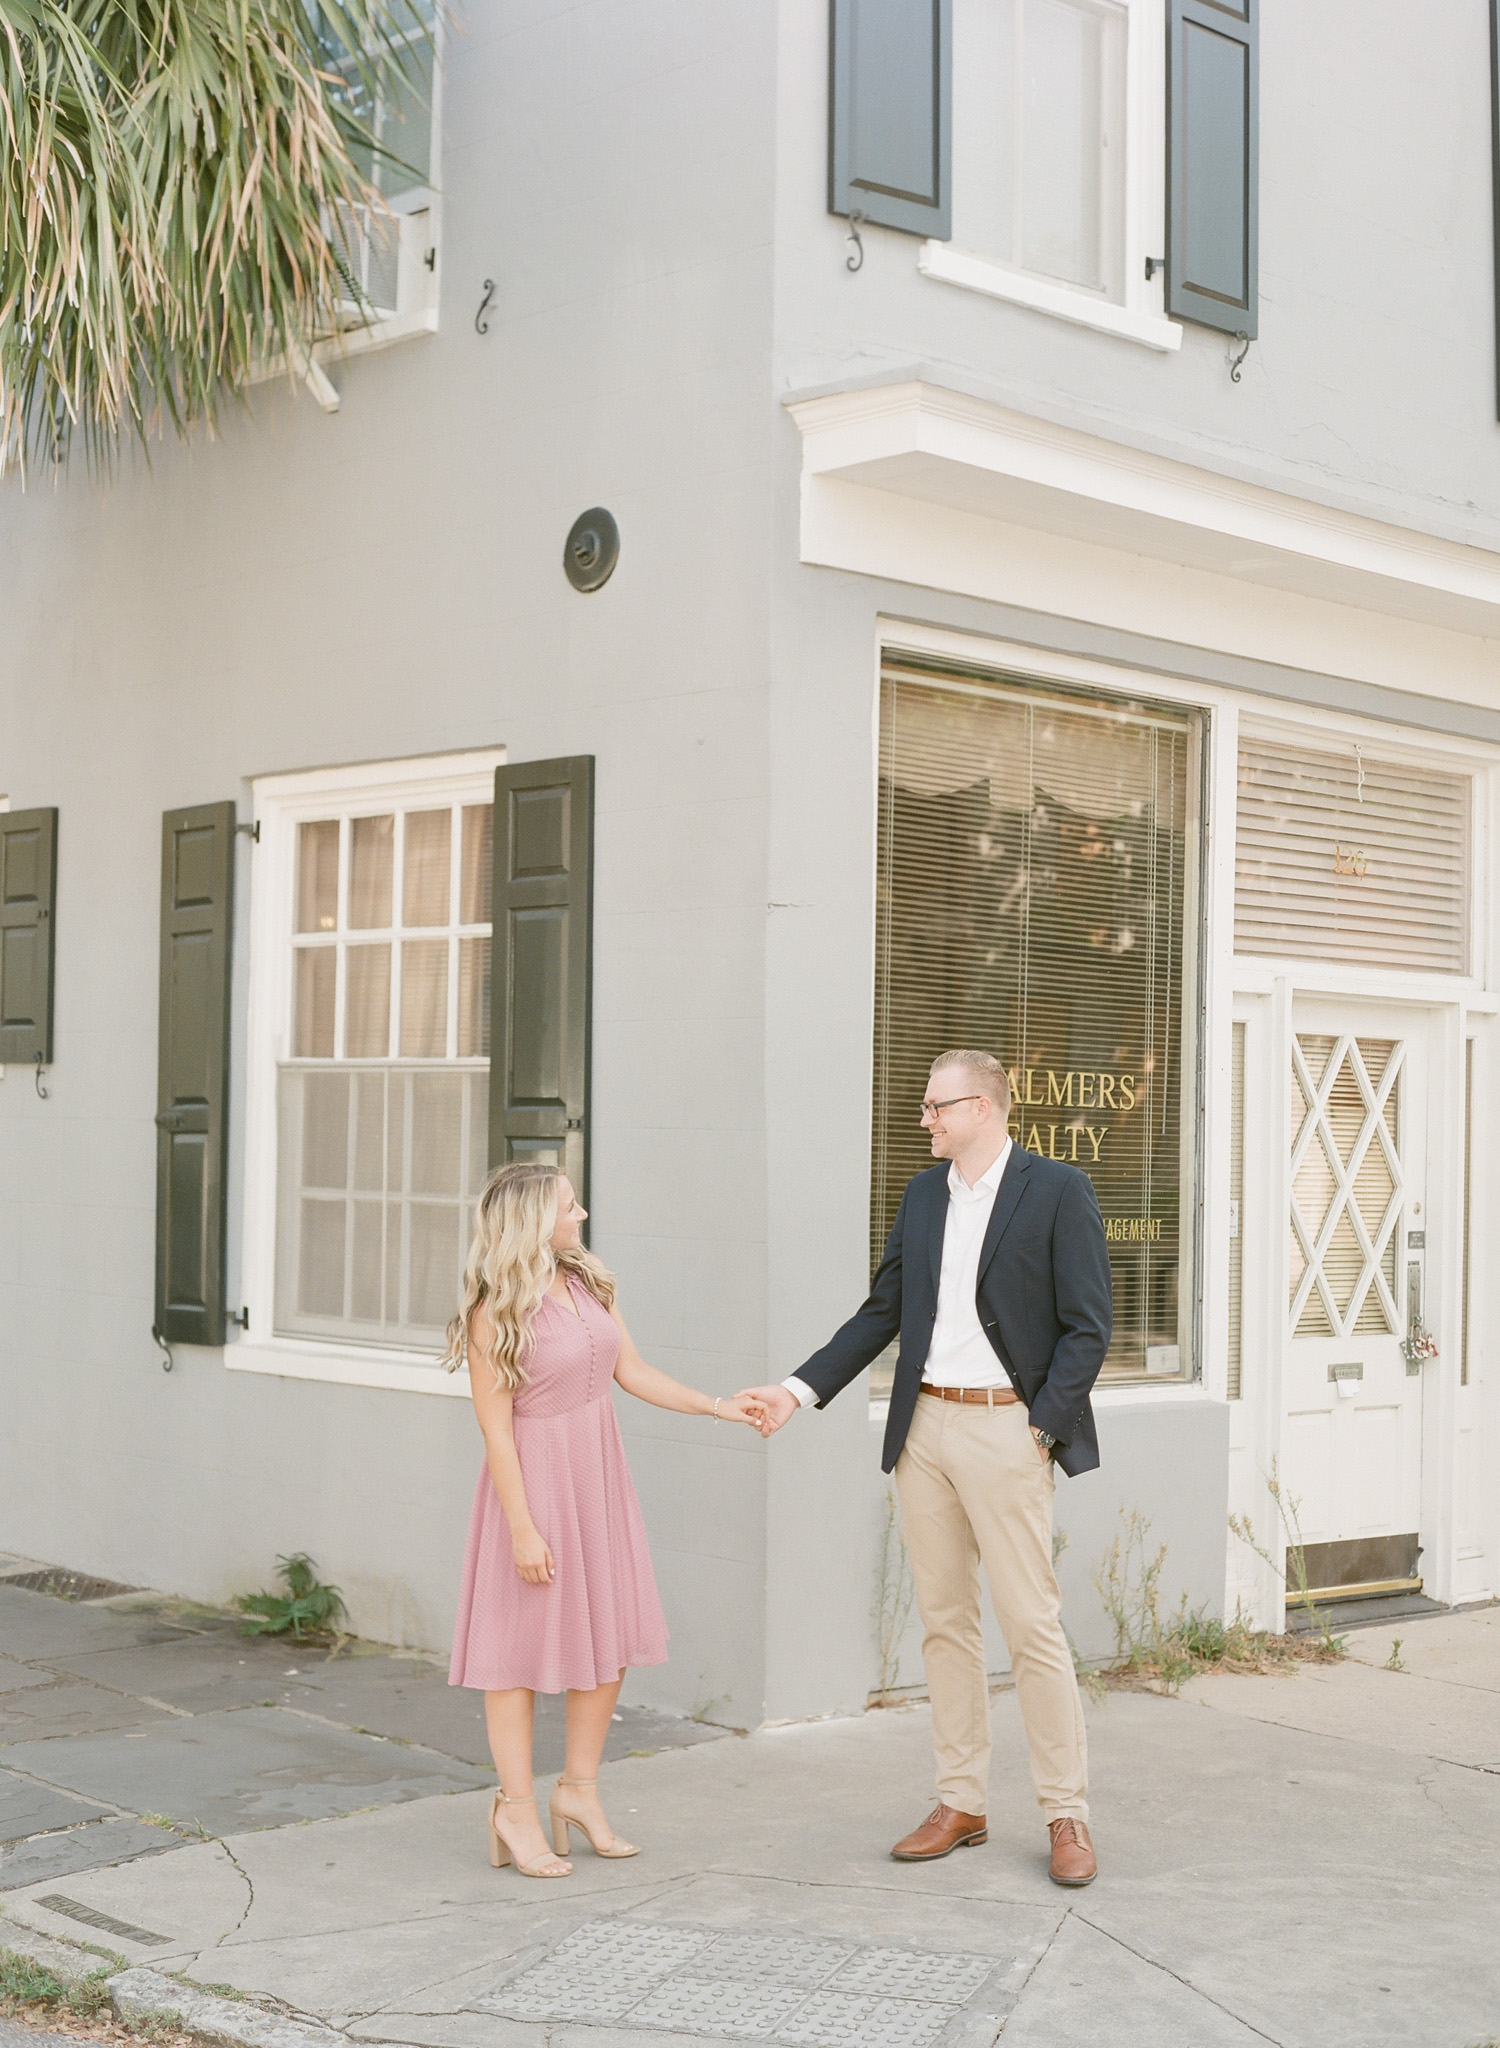 Cobblestone-Street-Engagement-Charleston-50.jpg